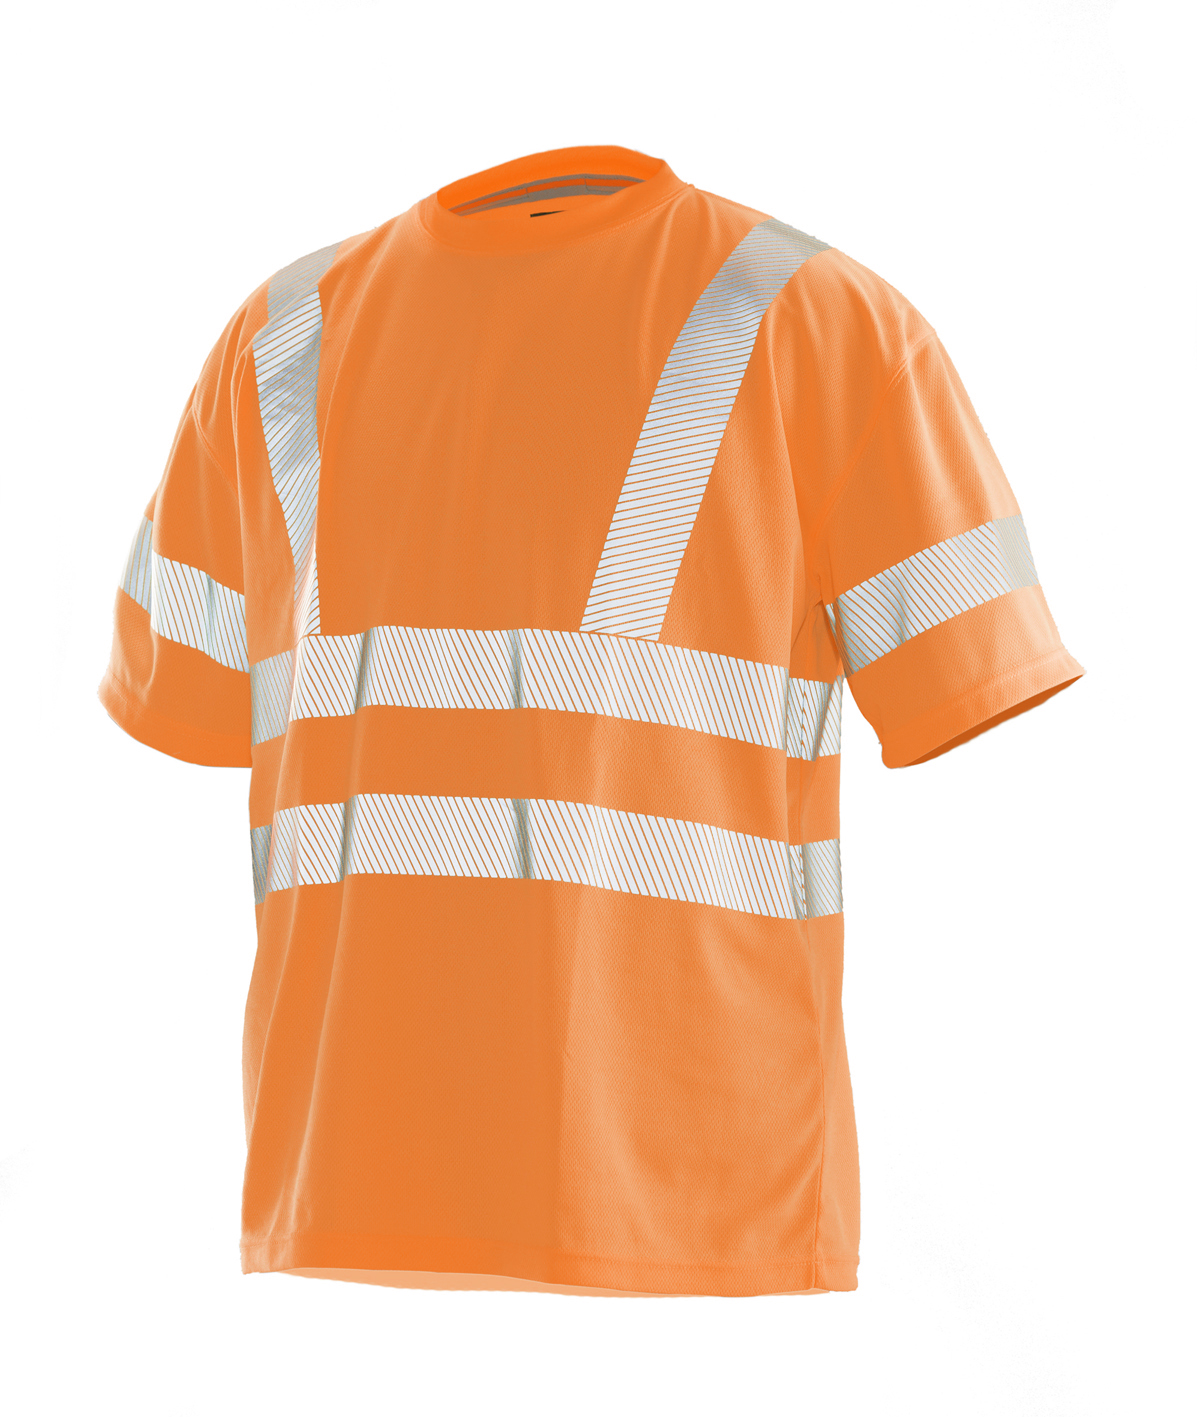 5584 T-shirt Hi-Vis L orange